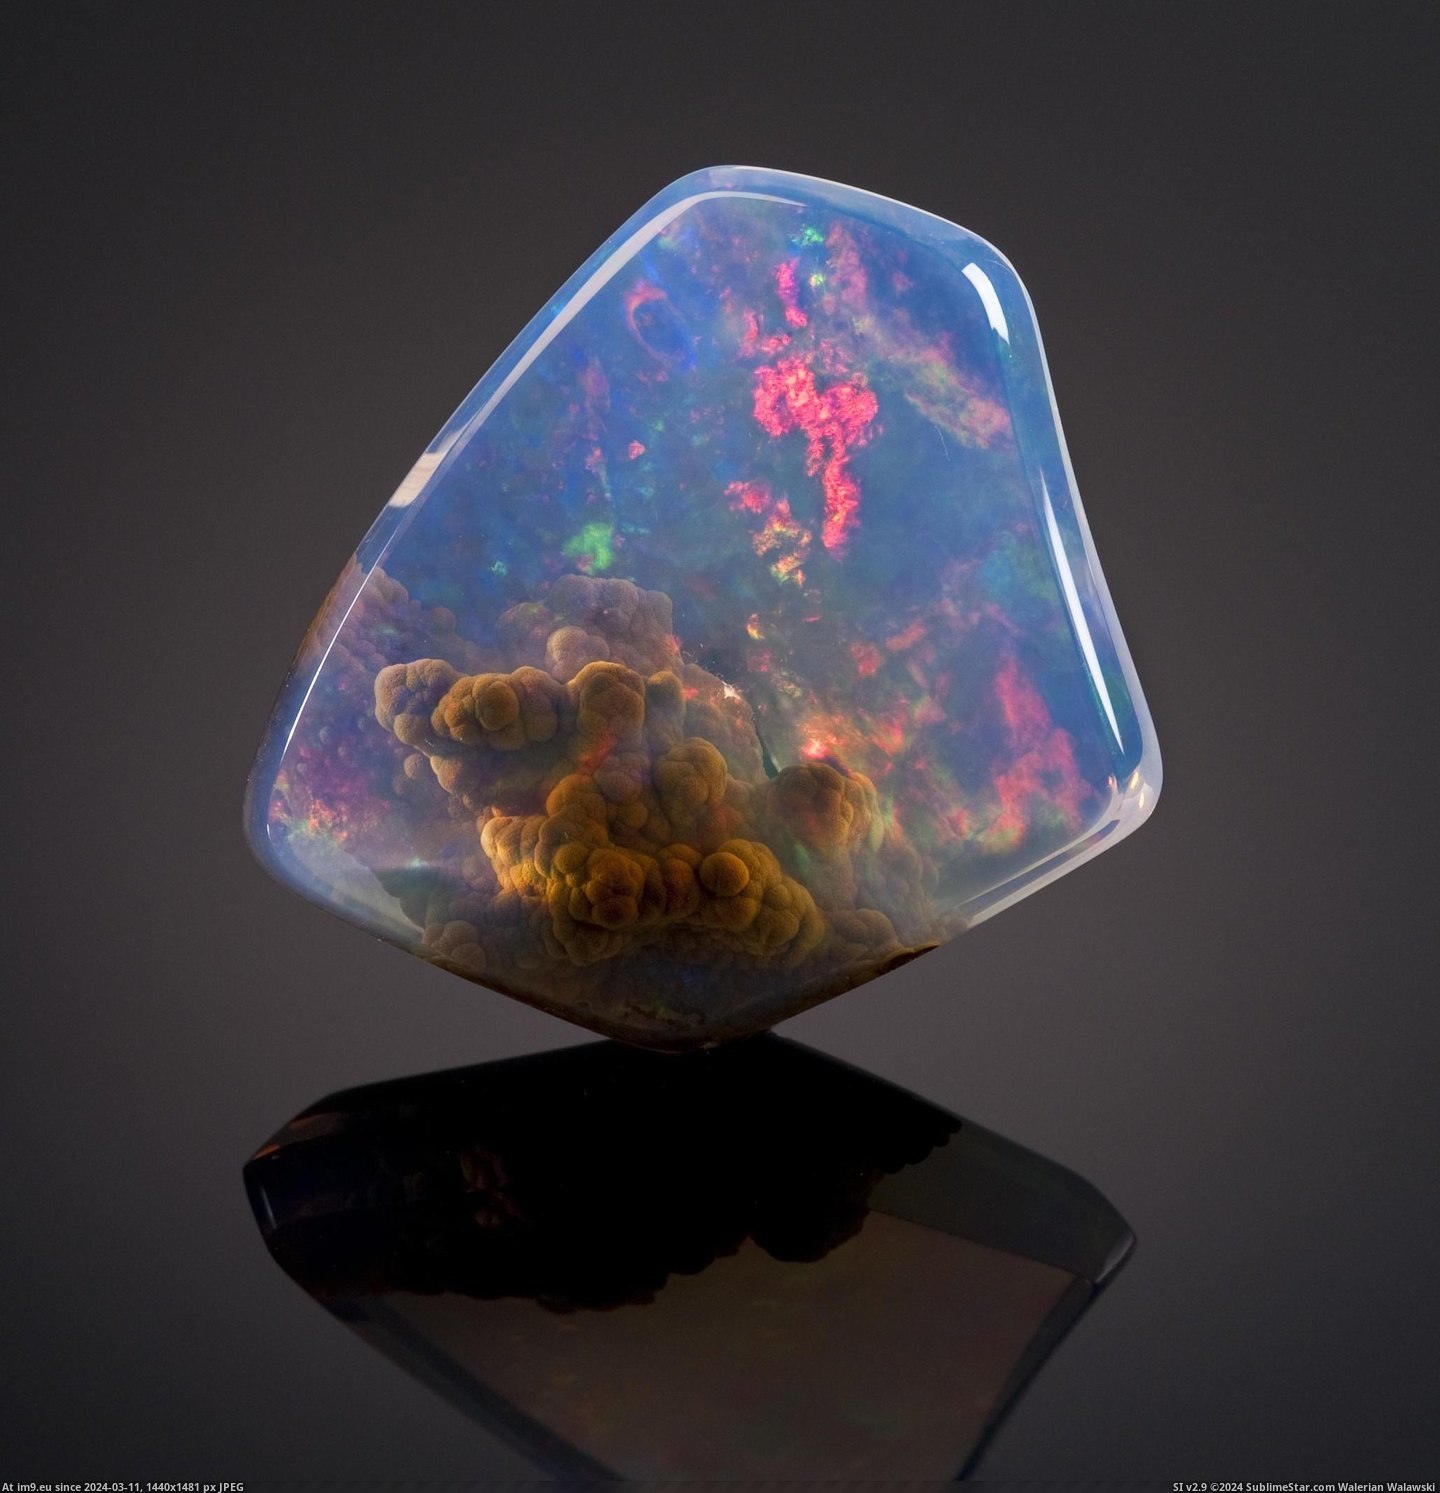 #Worth  #Opal [Pics] Contraluz opal worth $20000 Pic. (Изображение из альбом My r/PICS favs))